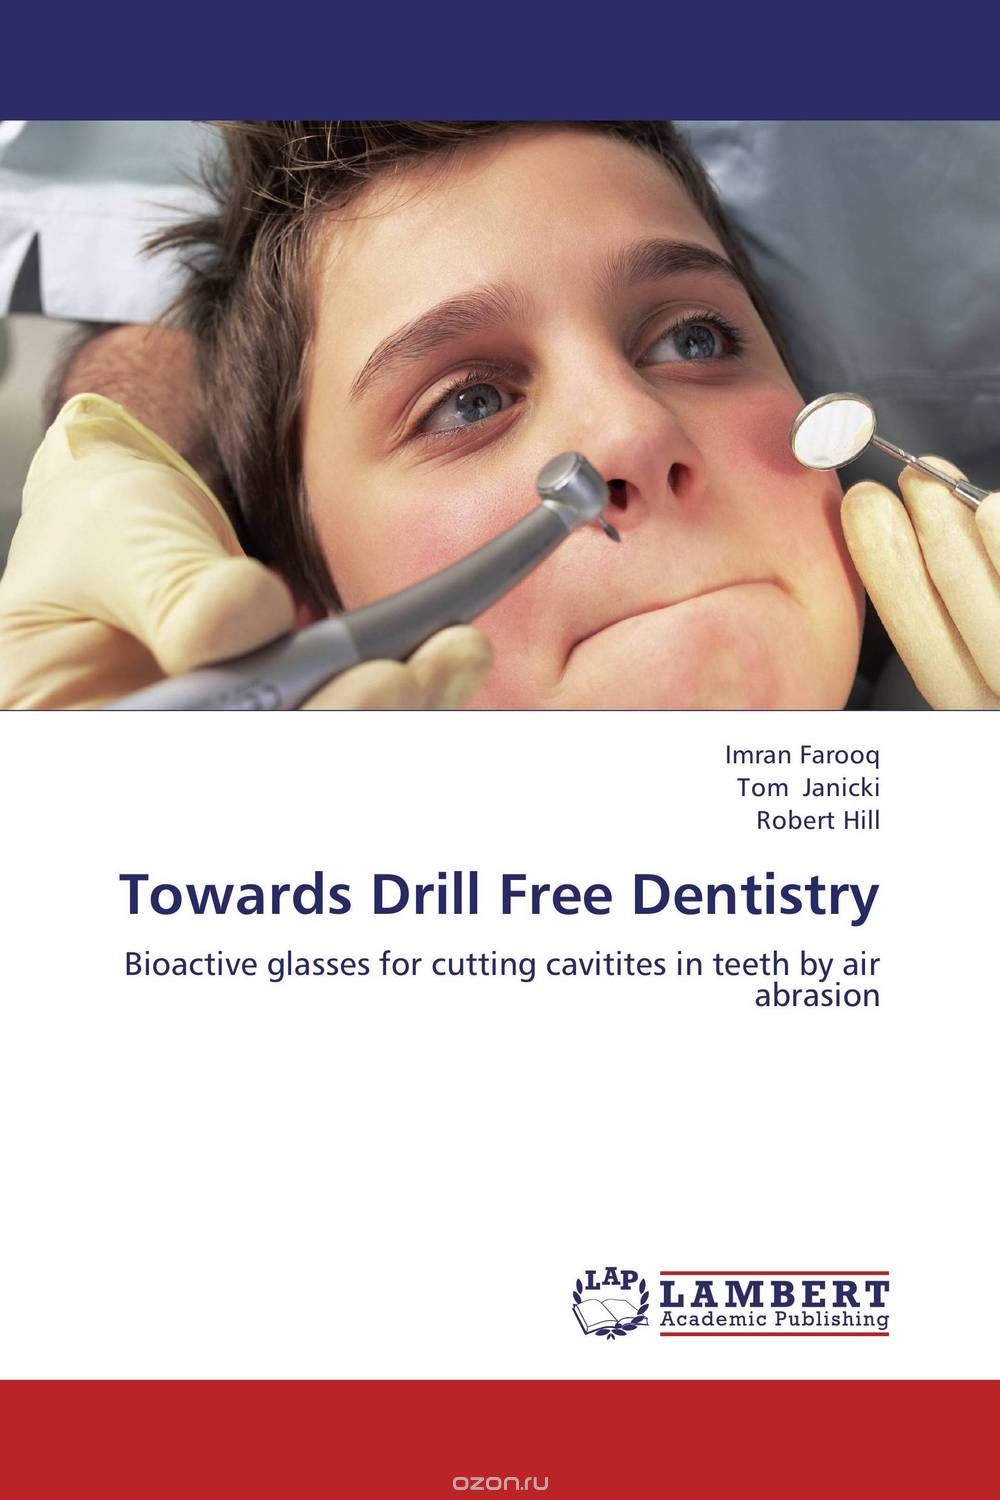 Скачать книгу "Towards Drill Free Dentistry"